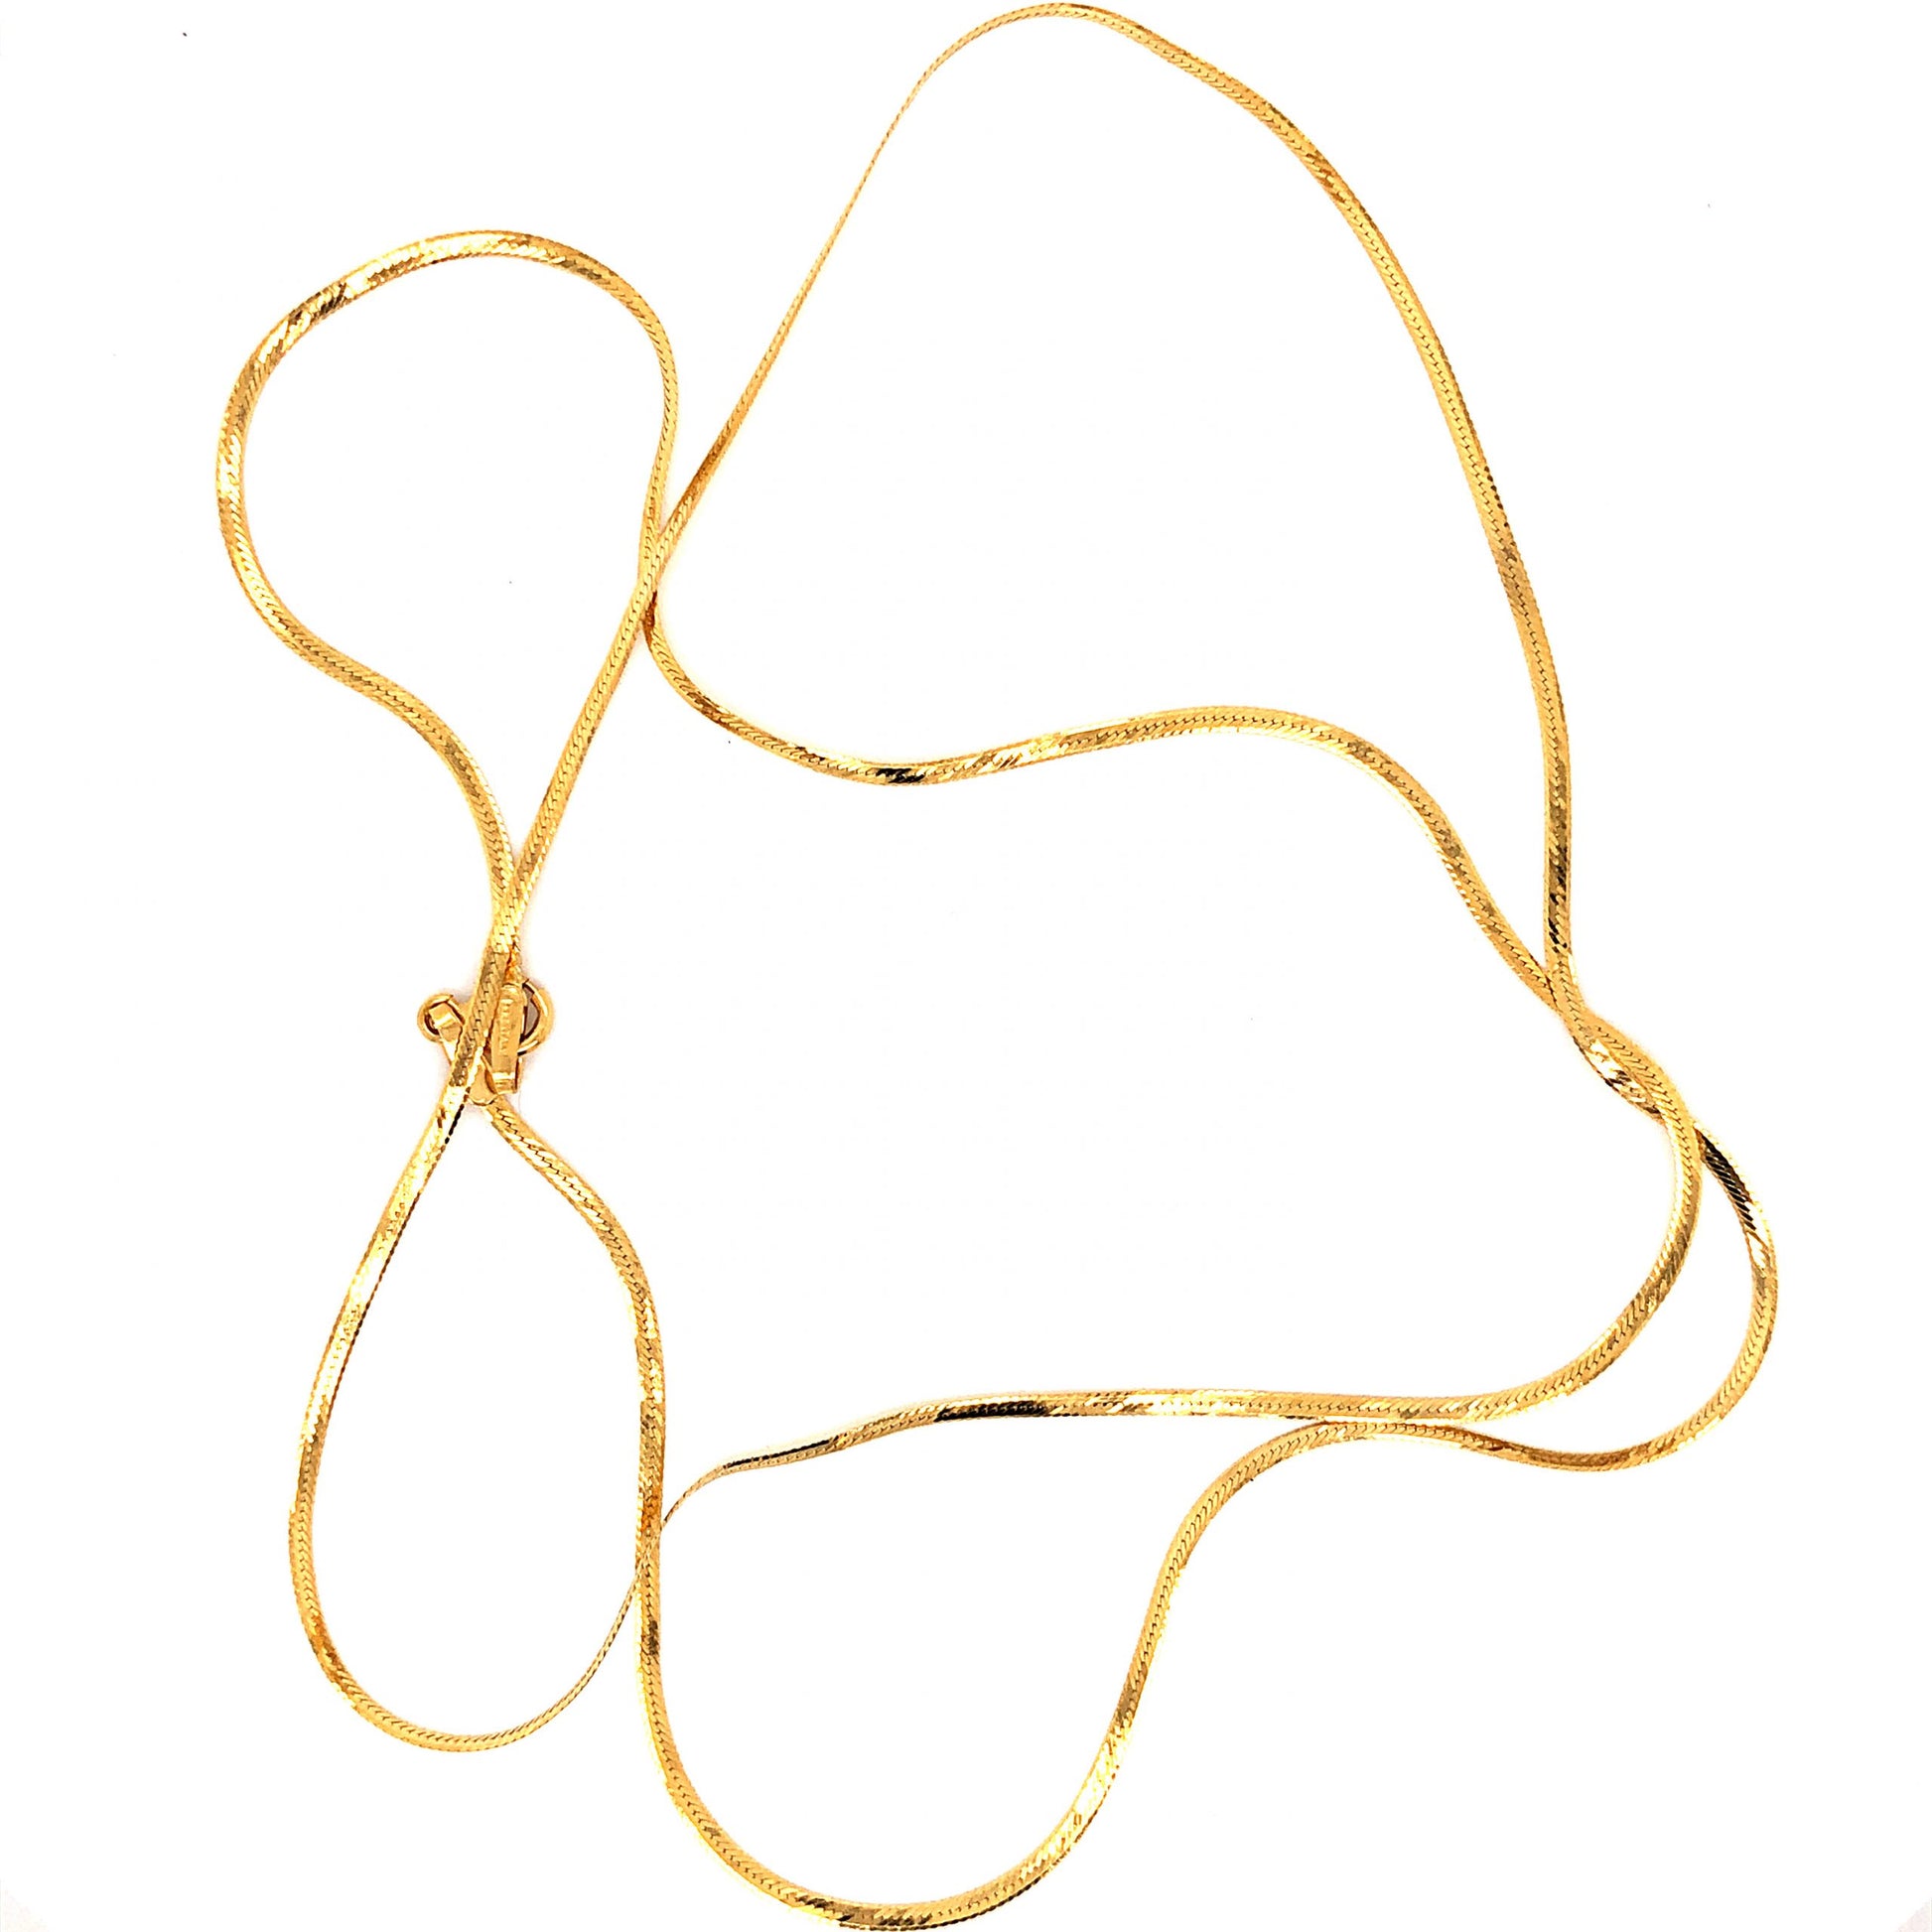 24 Inch Herringbone Necklace in 14k Yellow GoldComposition: 14 Karat Yellow Gold Total Gram Weight: 2.5 g Inscription: 14K ITALY SAK
      